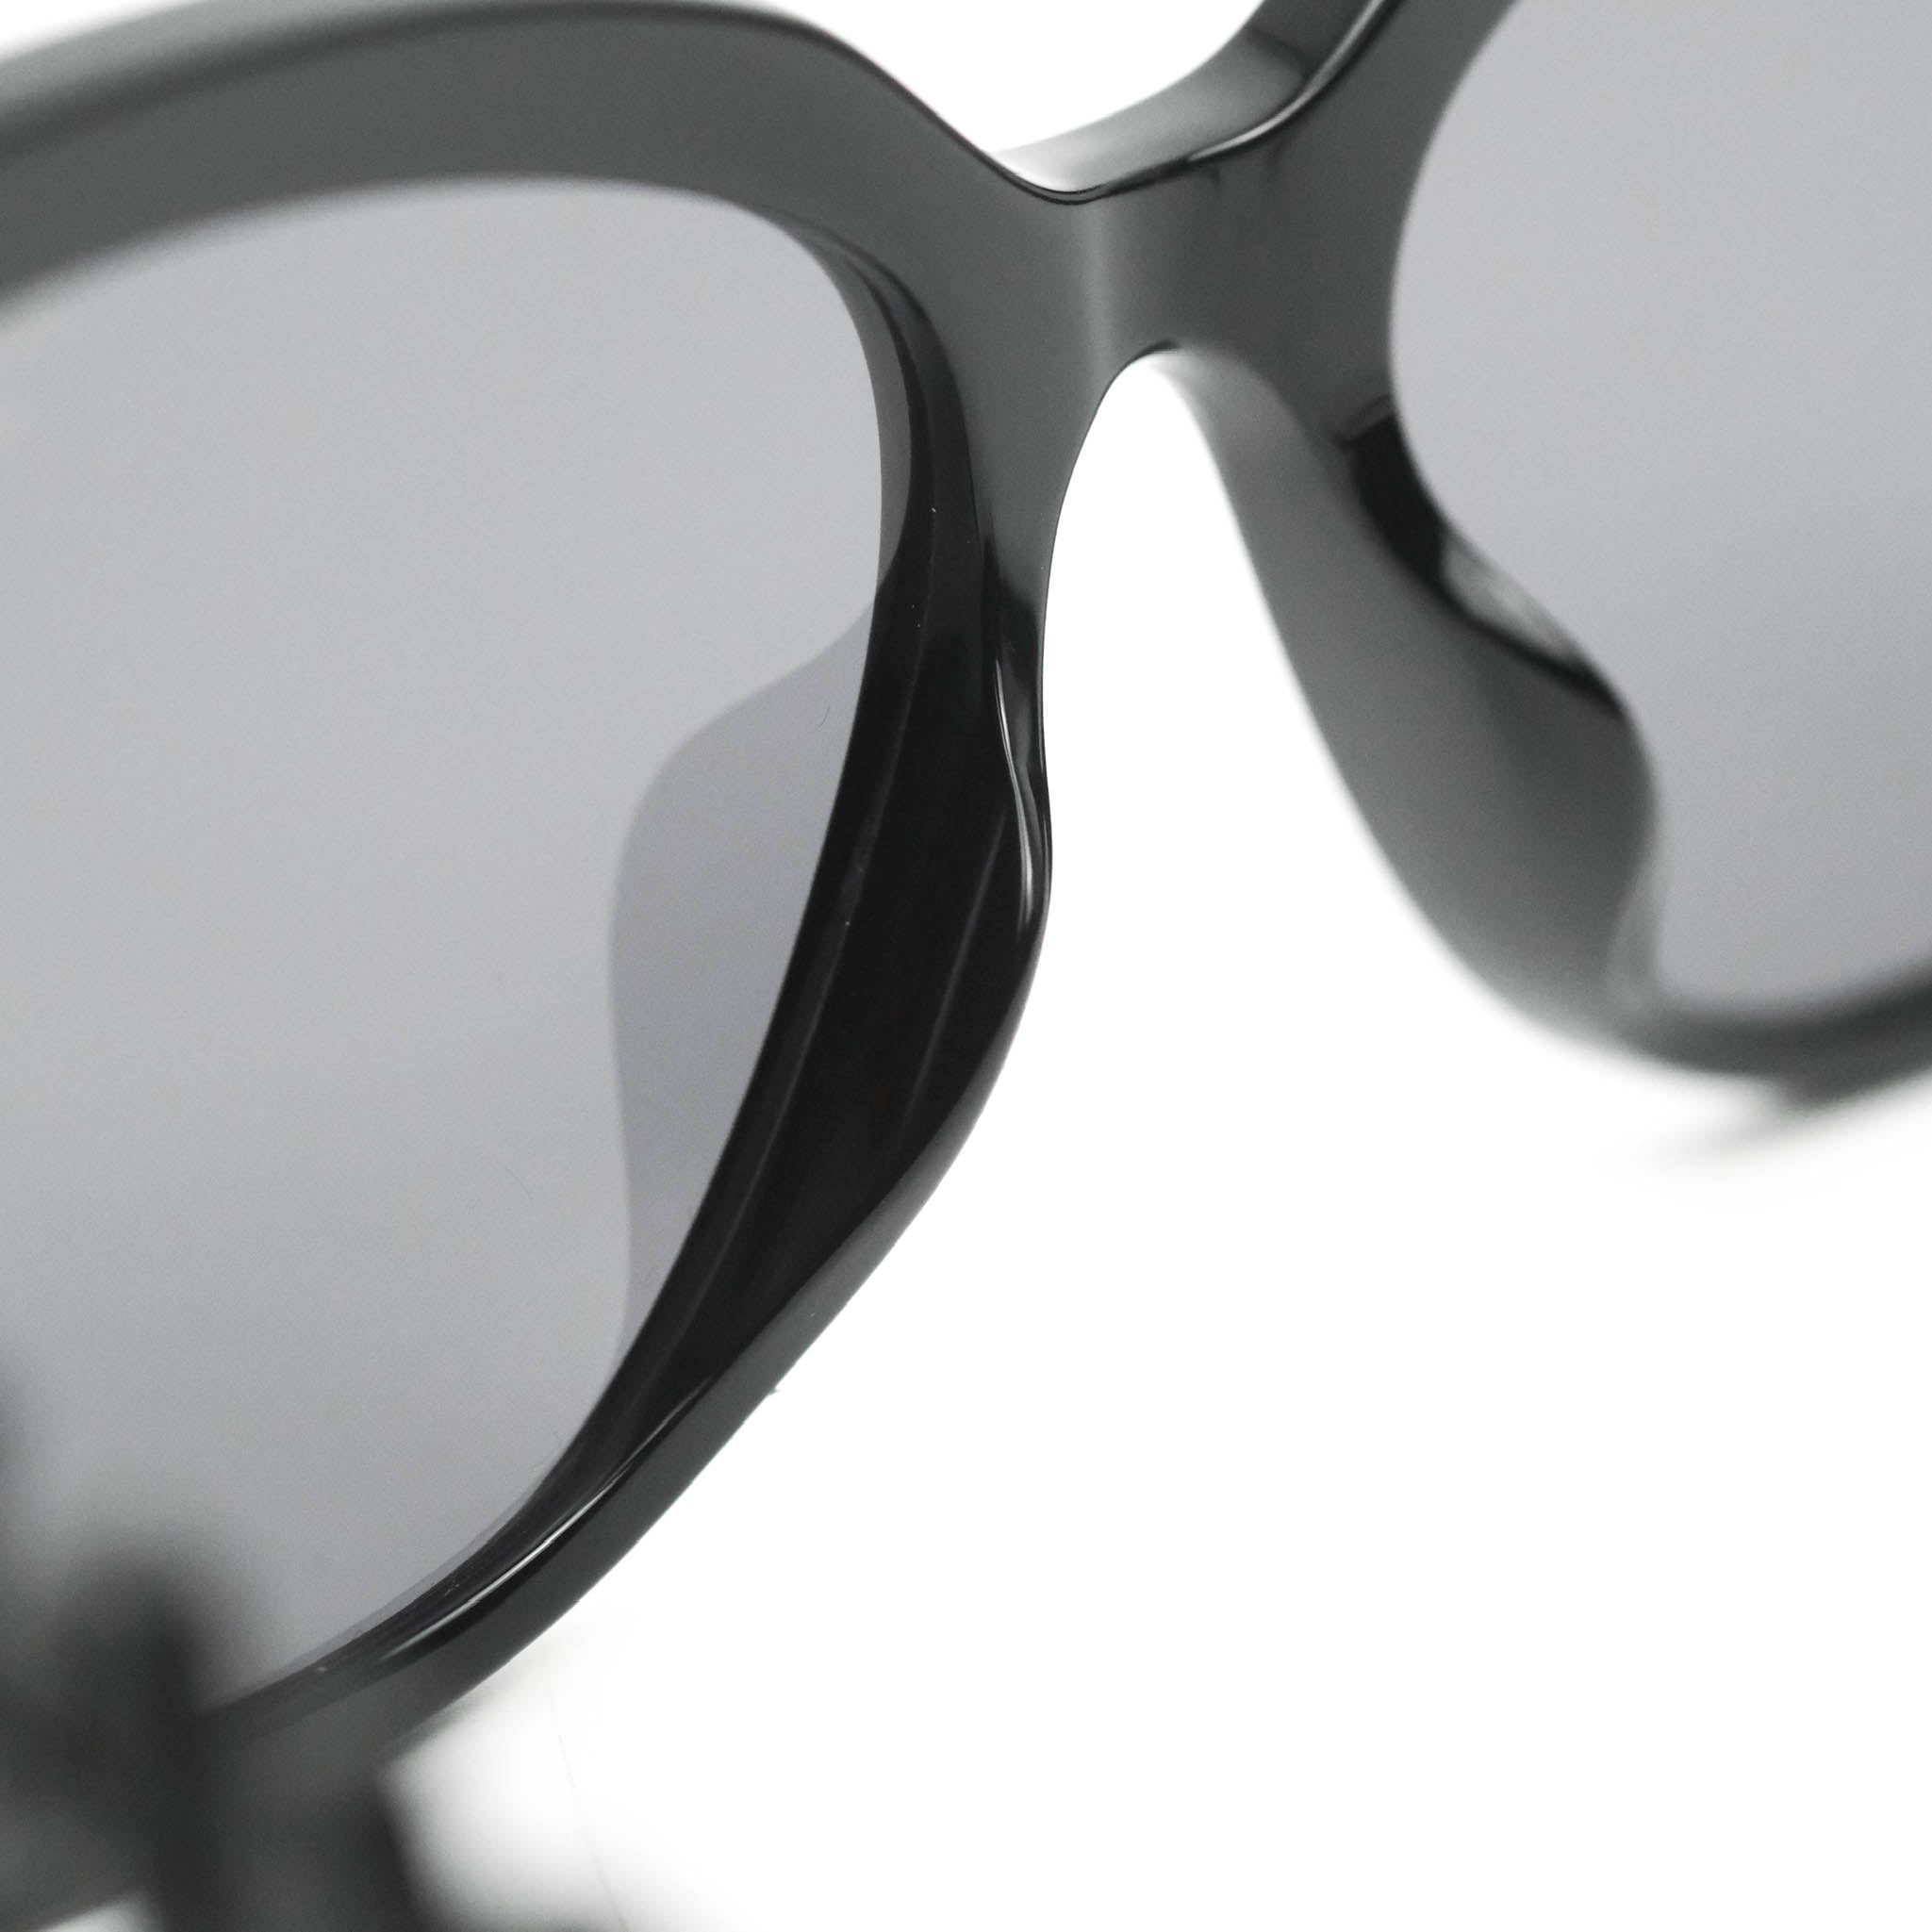 CHANEL Square Chain Sunglasses 5362-Q Shaded Black 149001